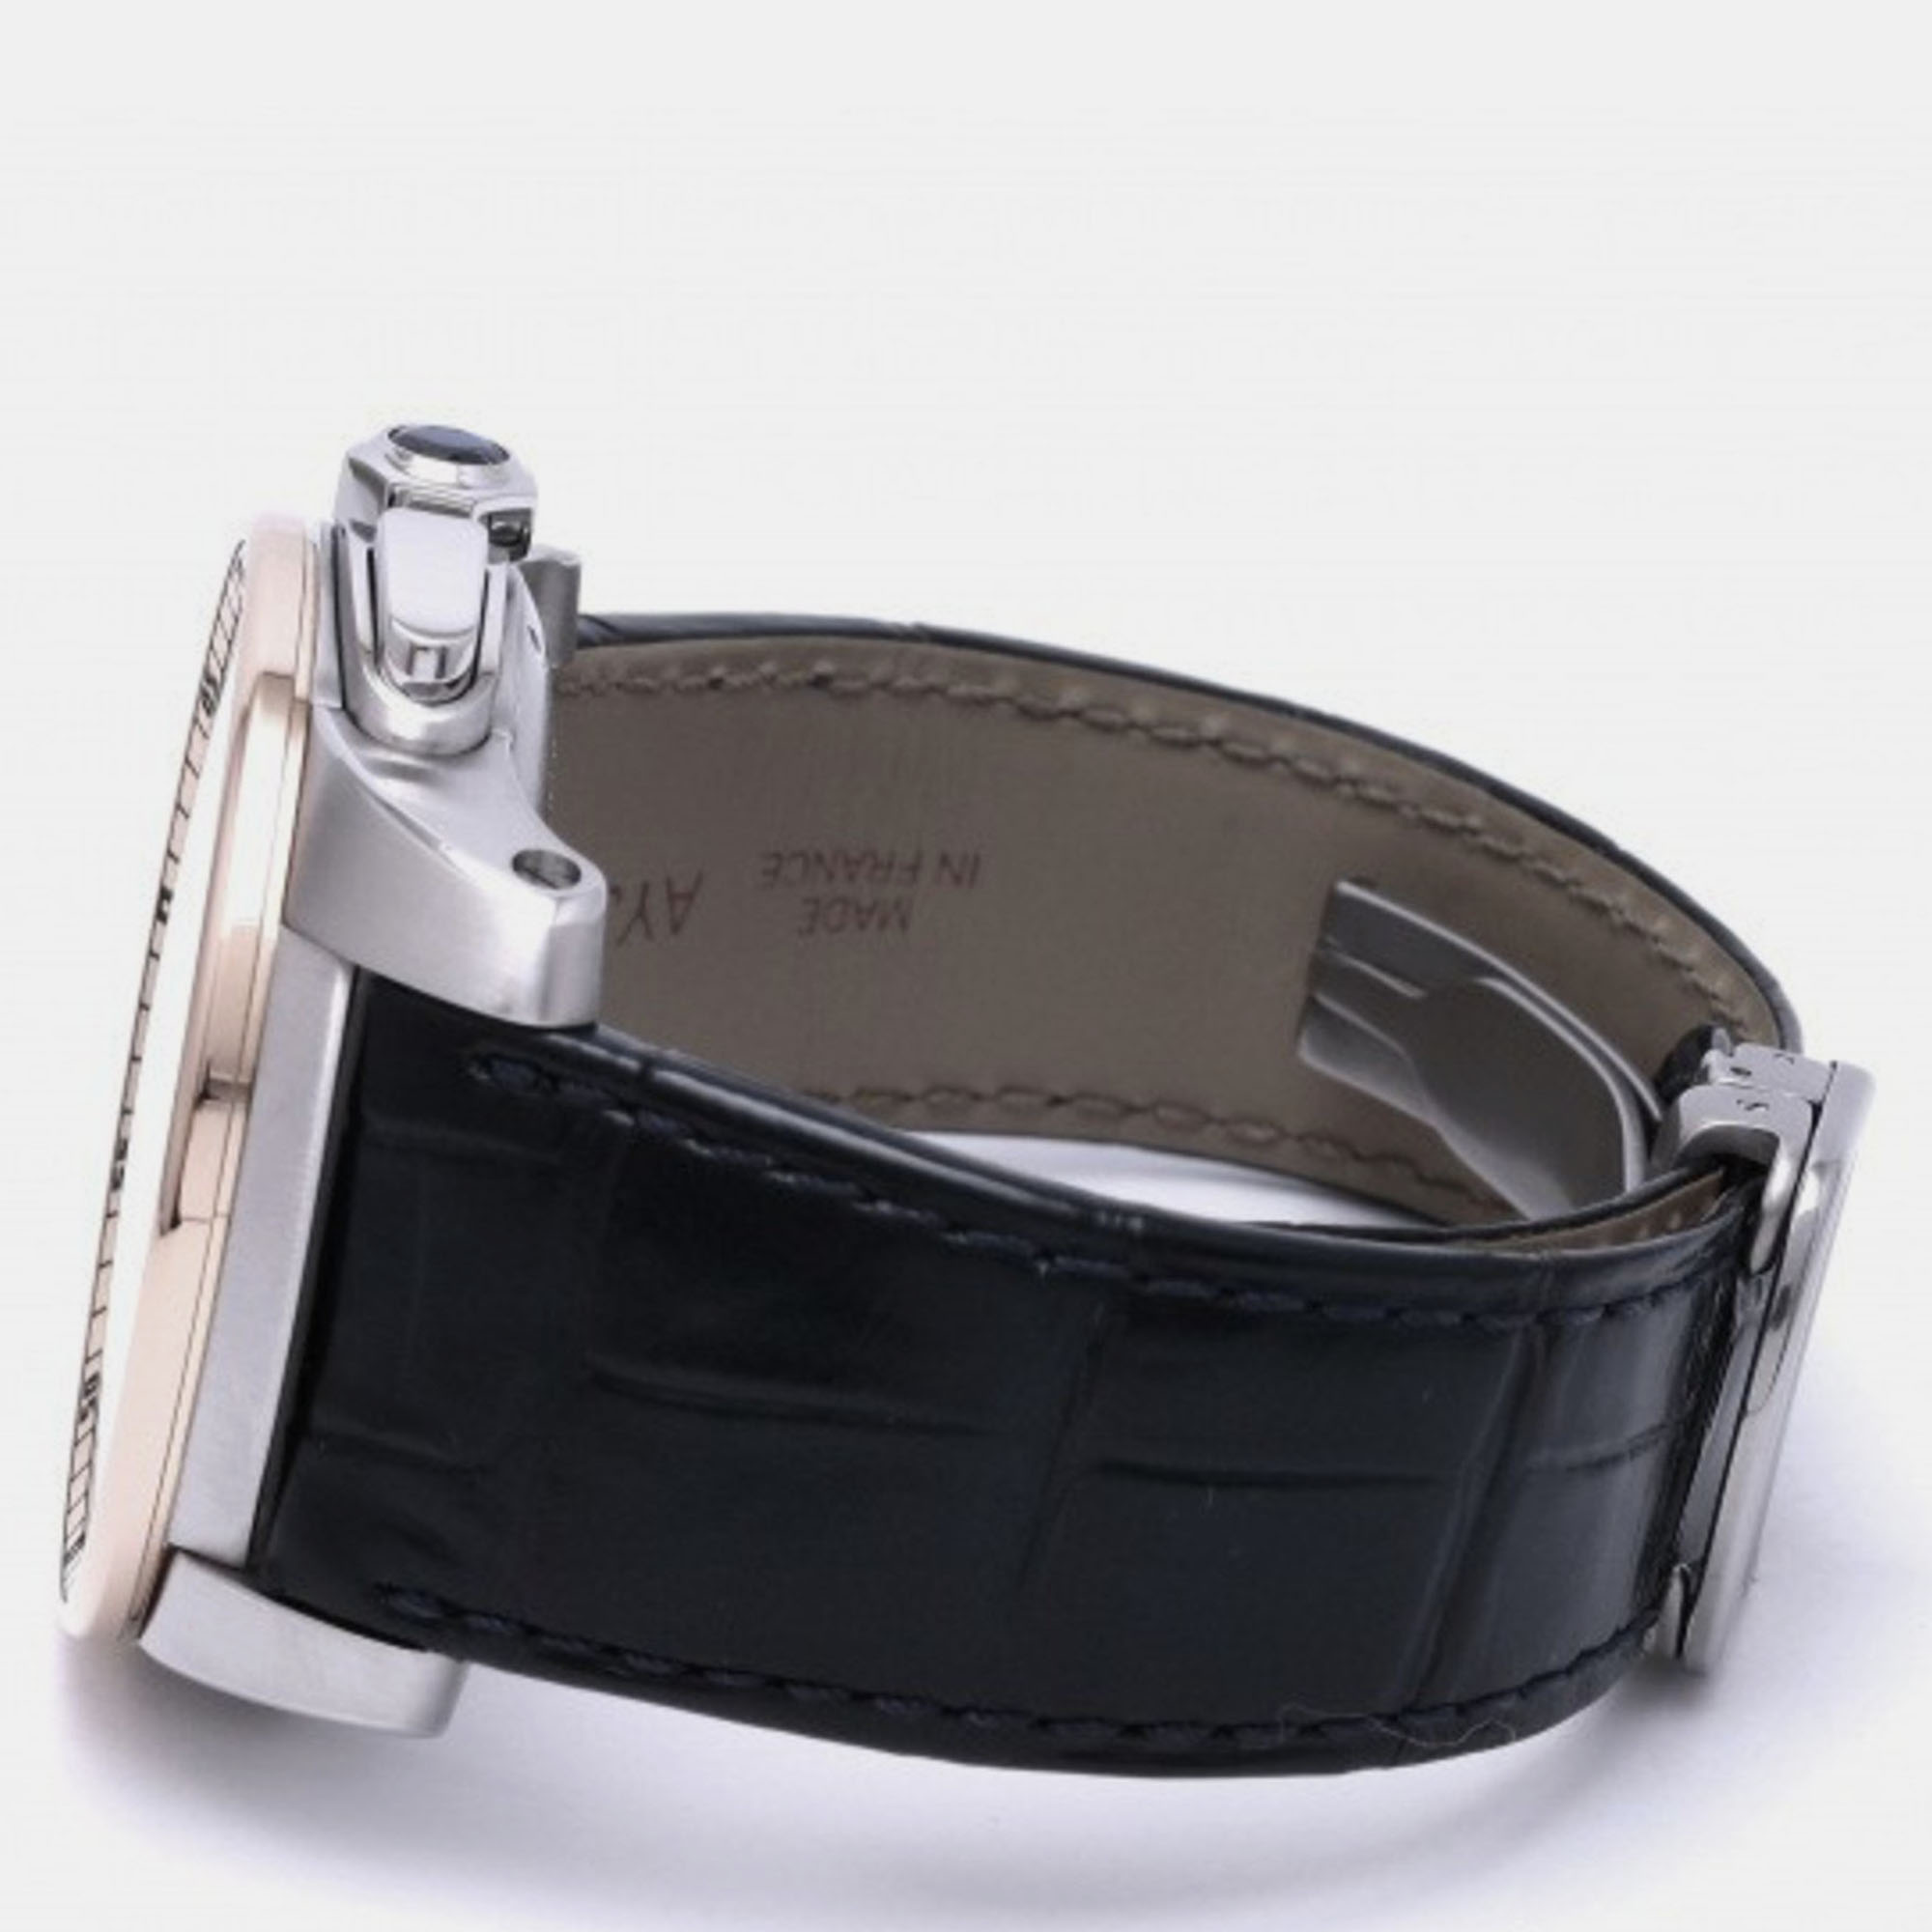 Cartier Silver 18k Rose Gold And Stainless Steel Calibre De Cartier W7100043 Automatic Men's Wristwatch 42 Mm